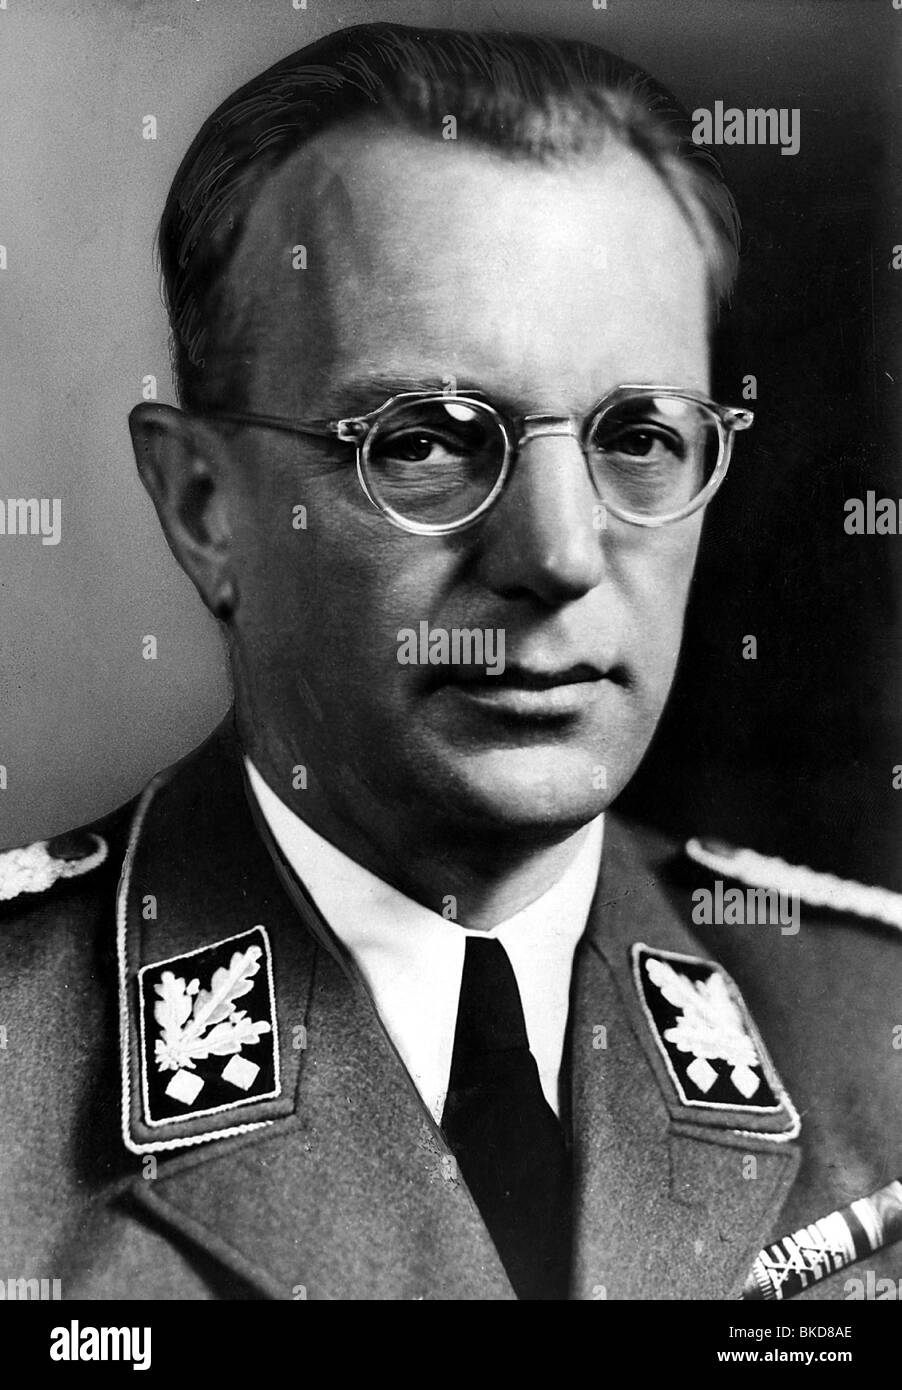 Seyss-Inquart, Arthur, 22.7.1892 - 16.10.1946, político austriaco (NSDAP), retrato, en uniforme de las SS, alrededor de 1940, Foto de stock